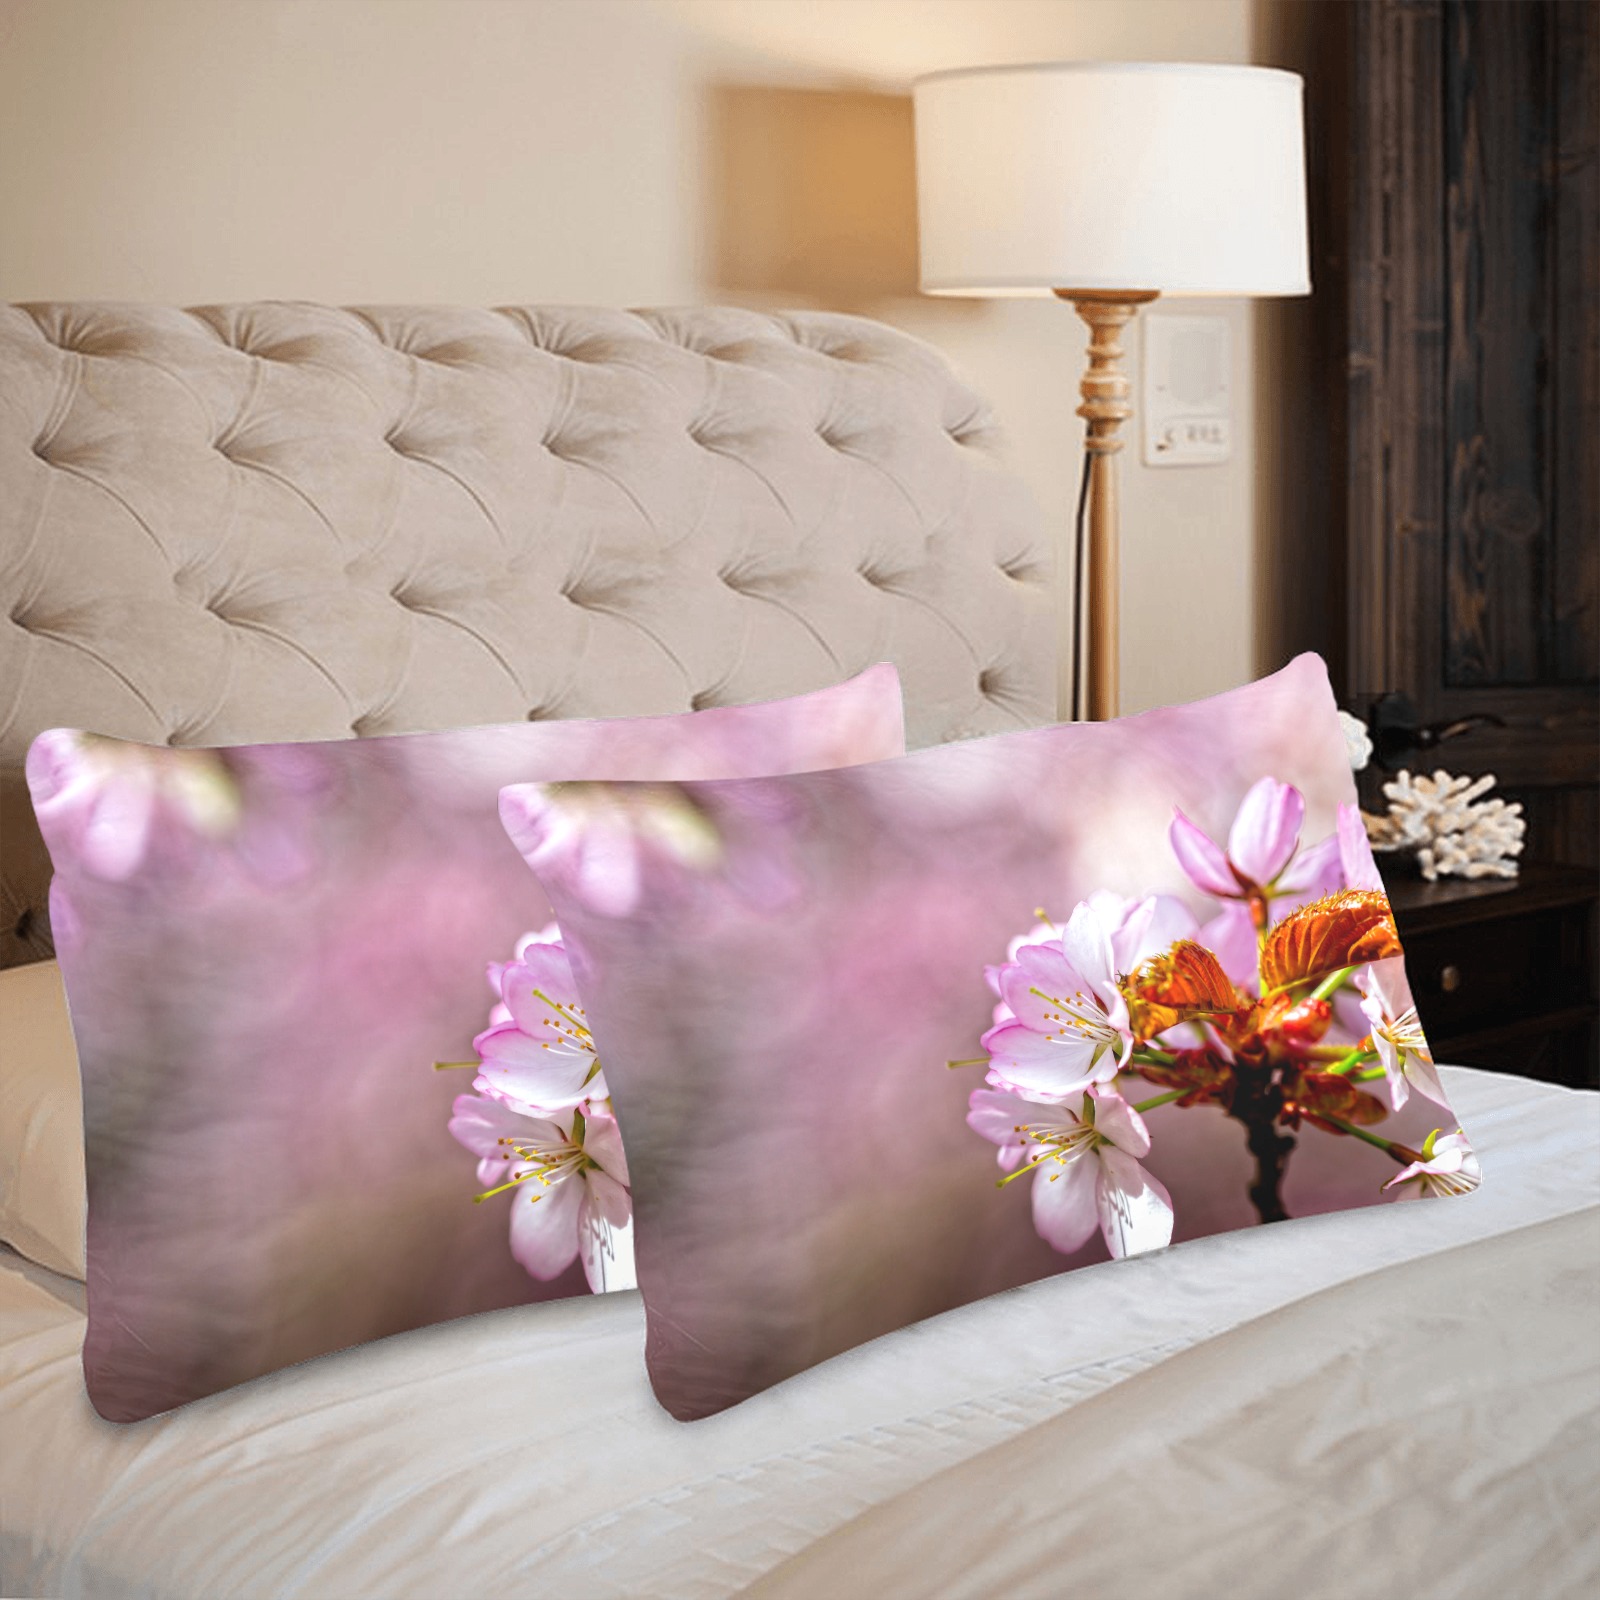 Classy sakura cherry flowers, pink mist of spring. Custom Pillow Case 20"x 30" (One Side) (Set of 2)